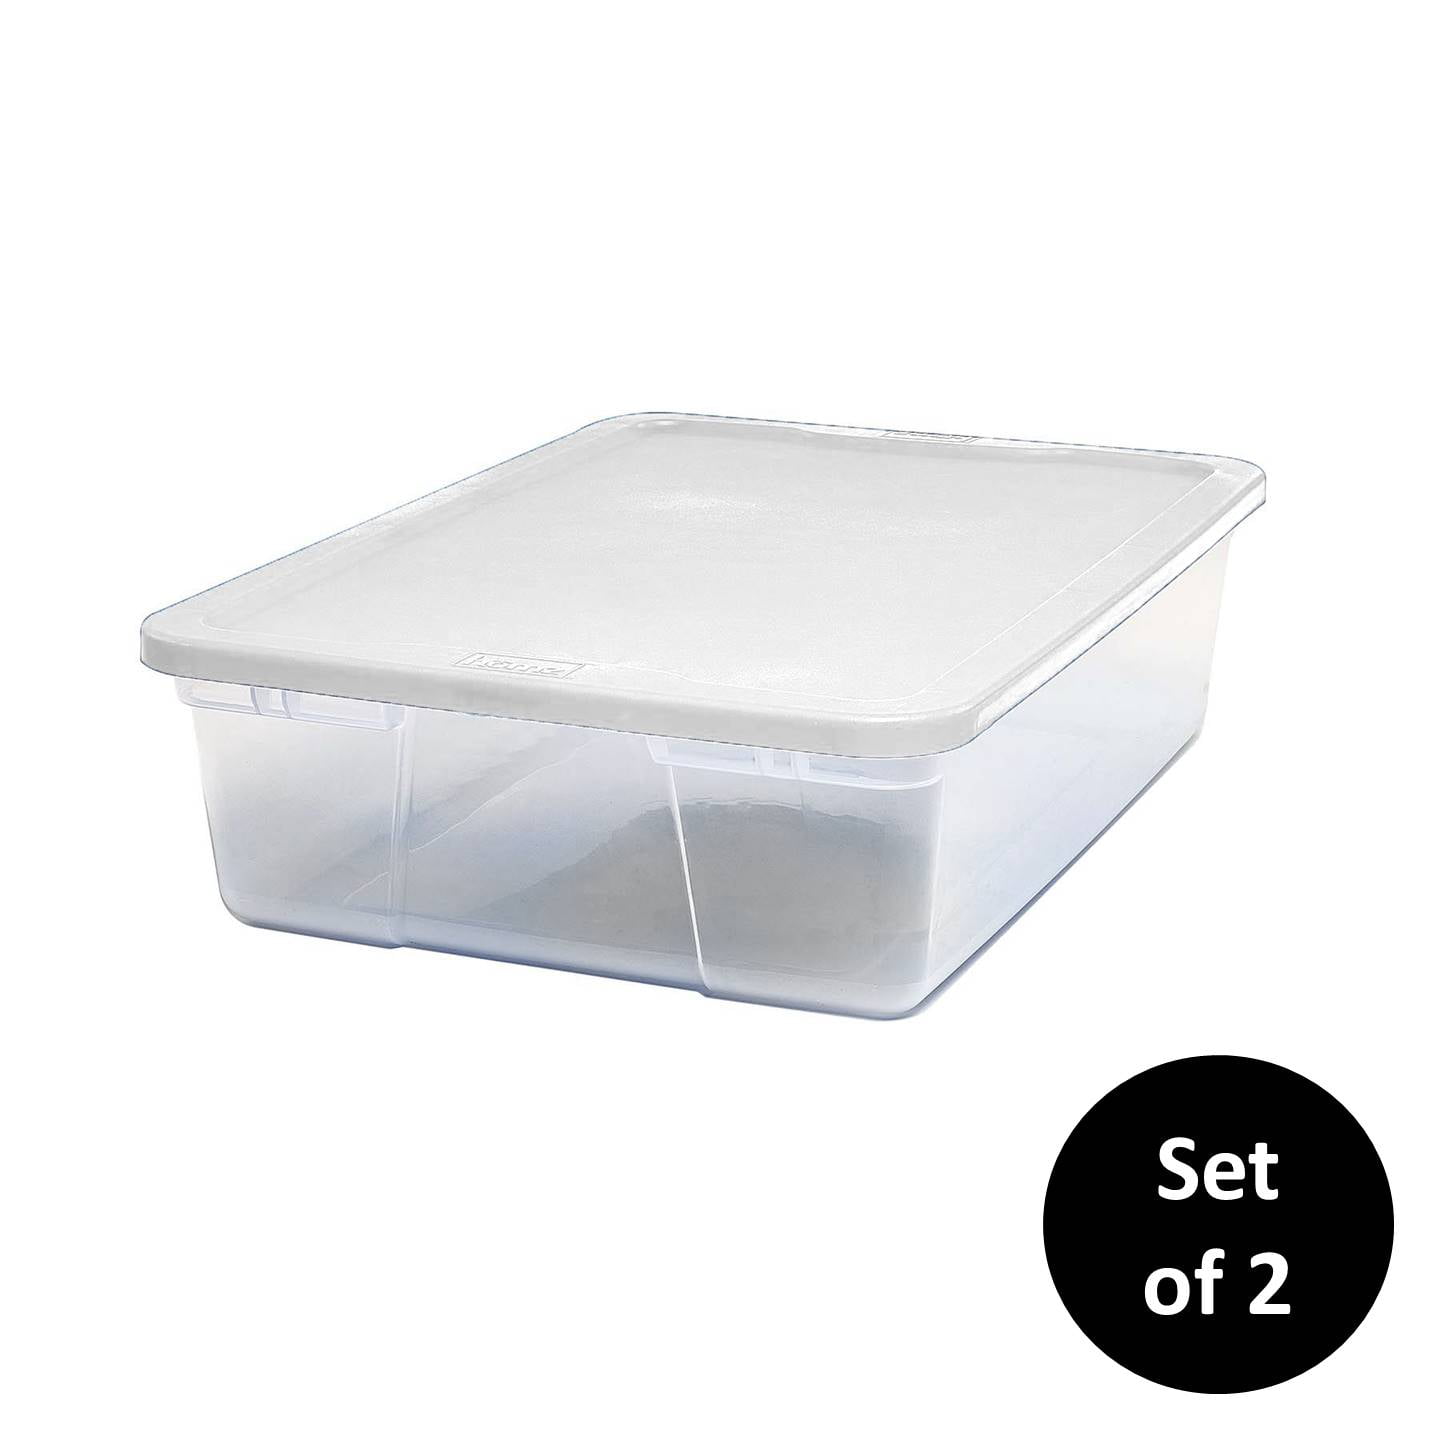 Homz Snaplock® 28 Quart Clear Under Bed Storage Container with White